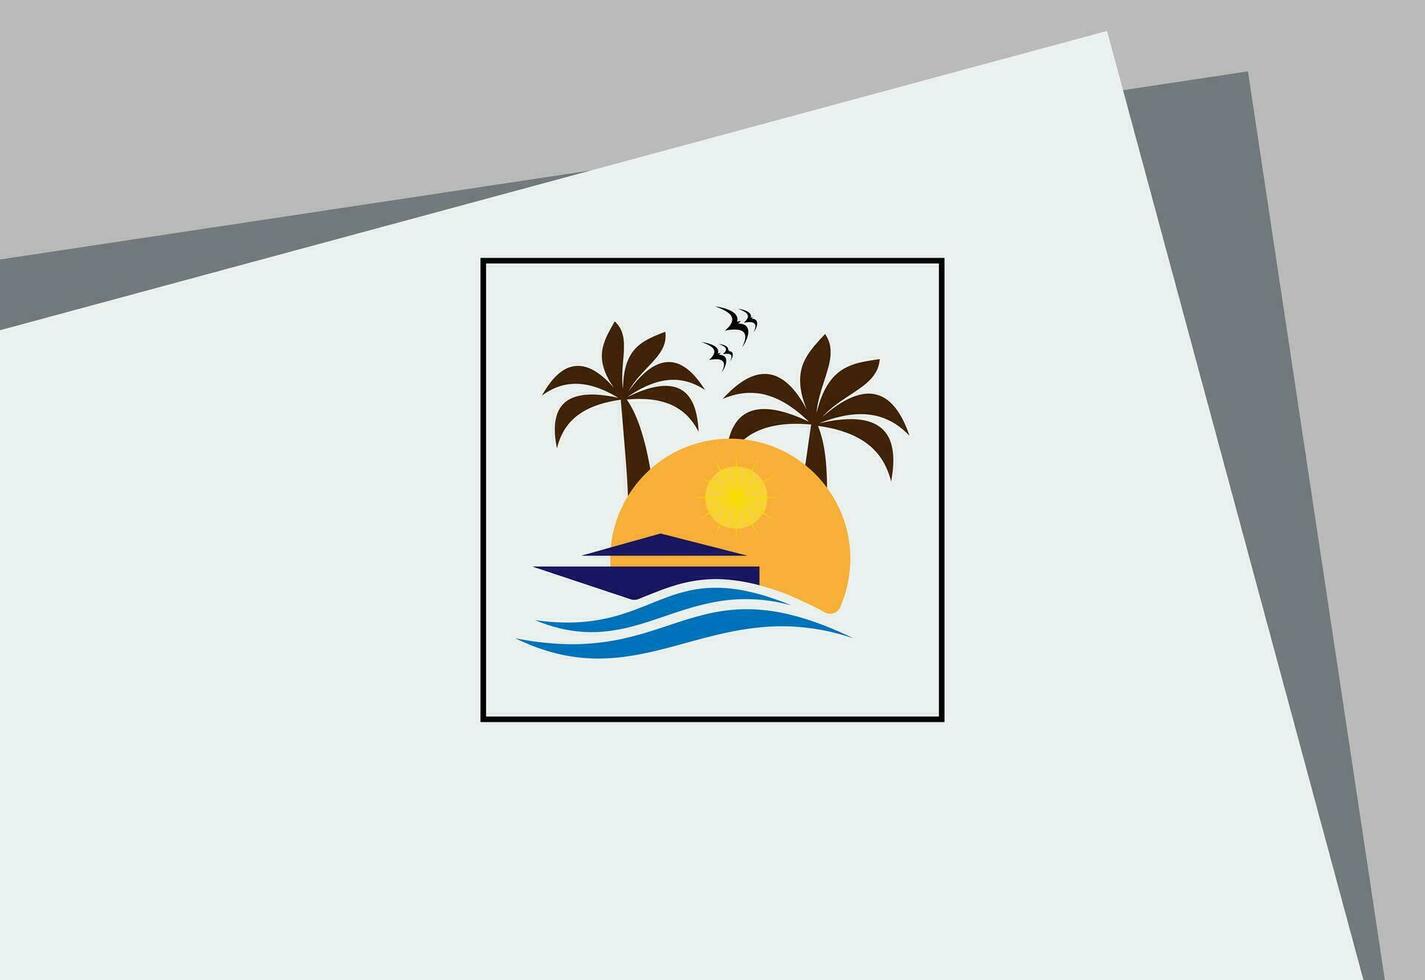 beach logo vector illustration